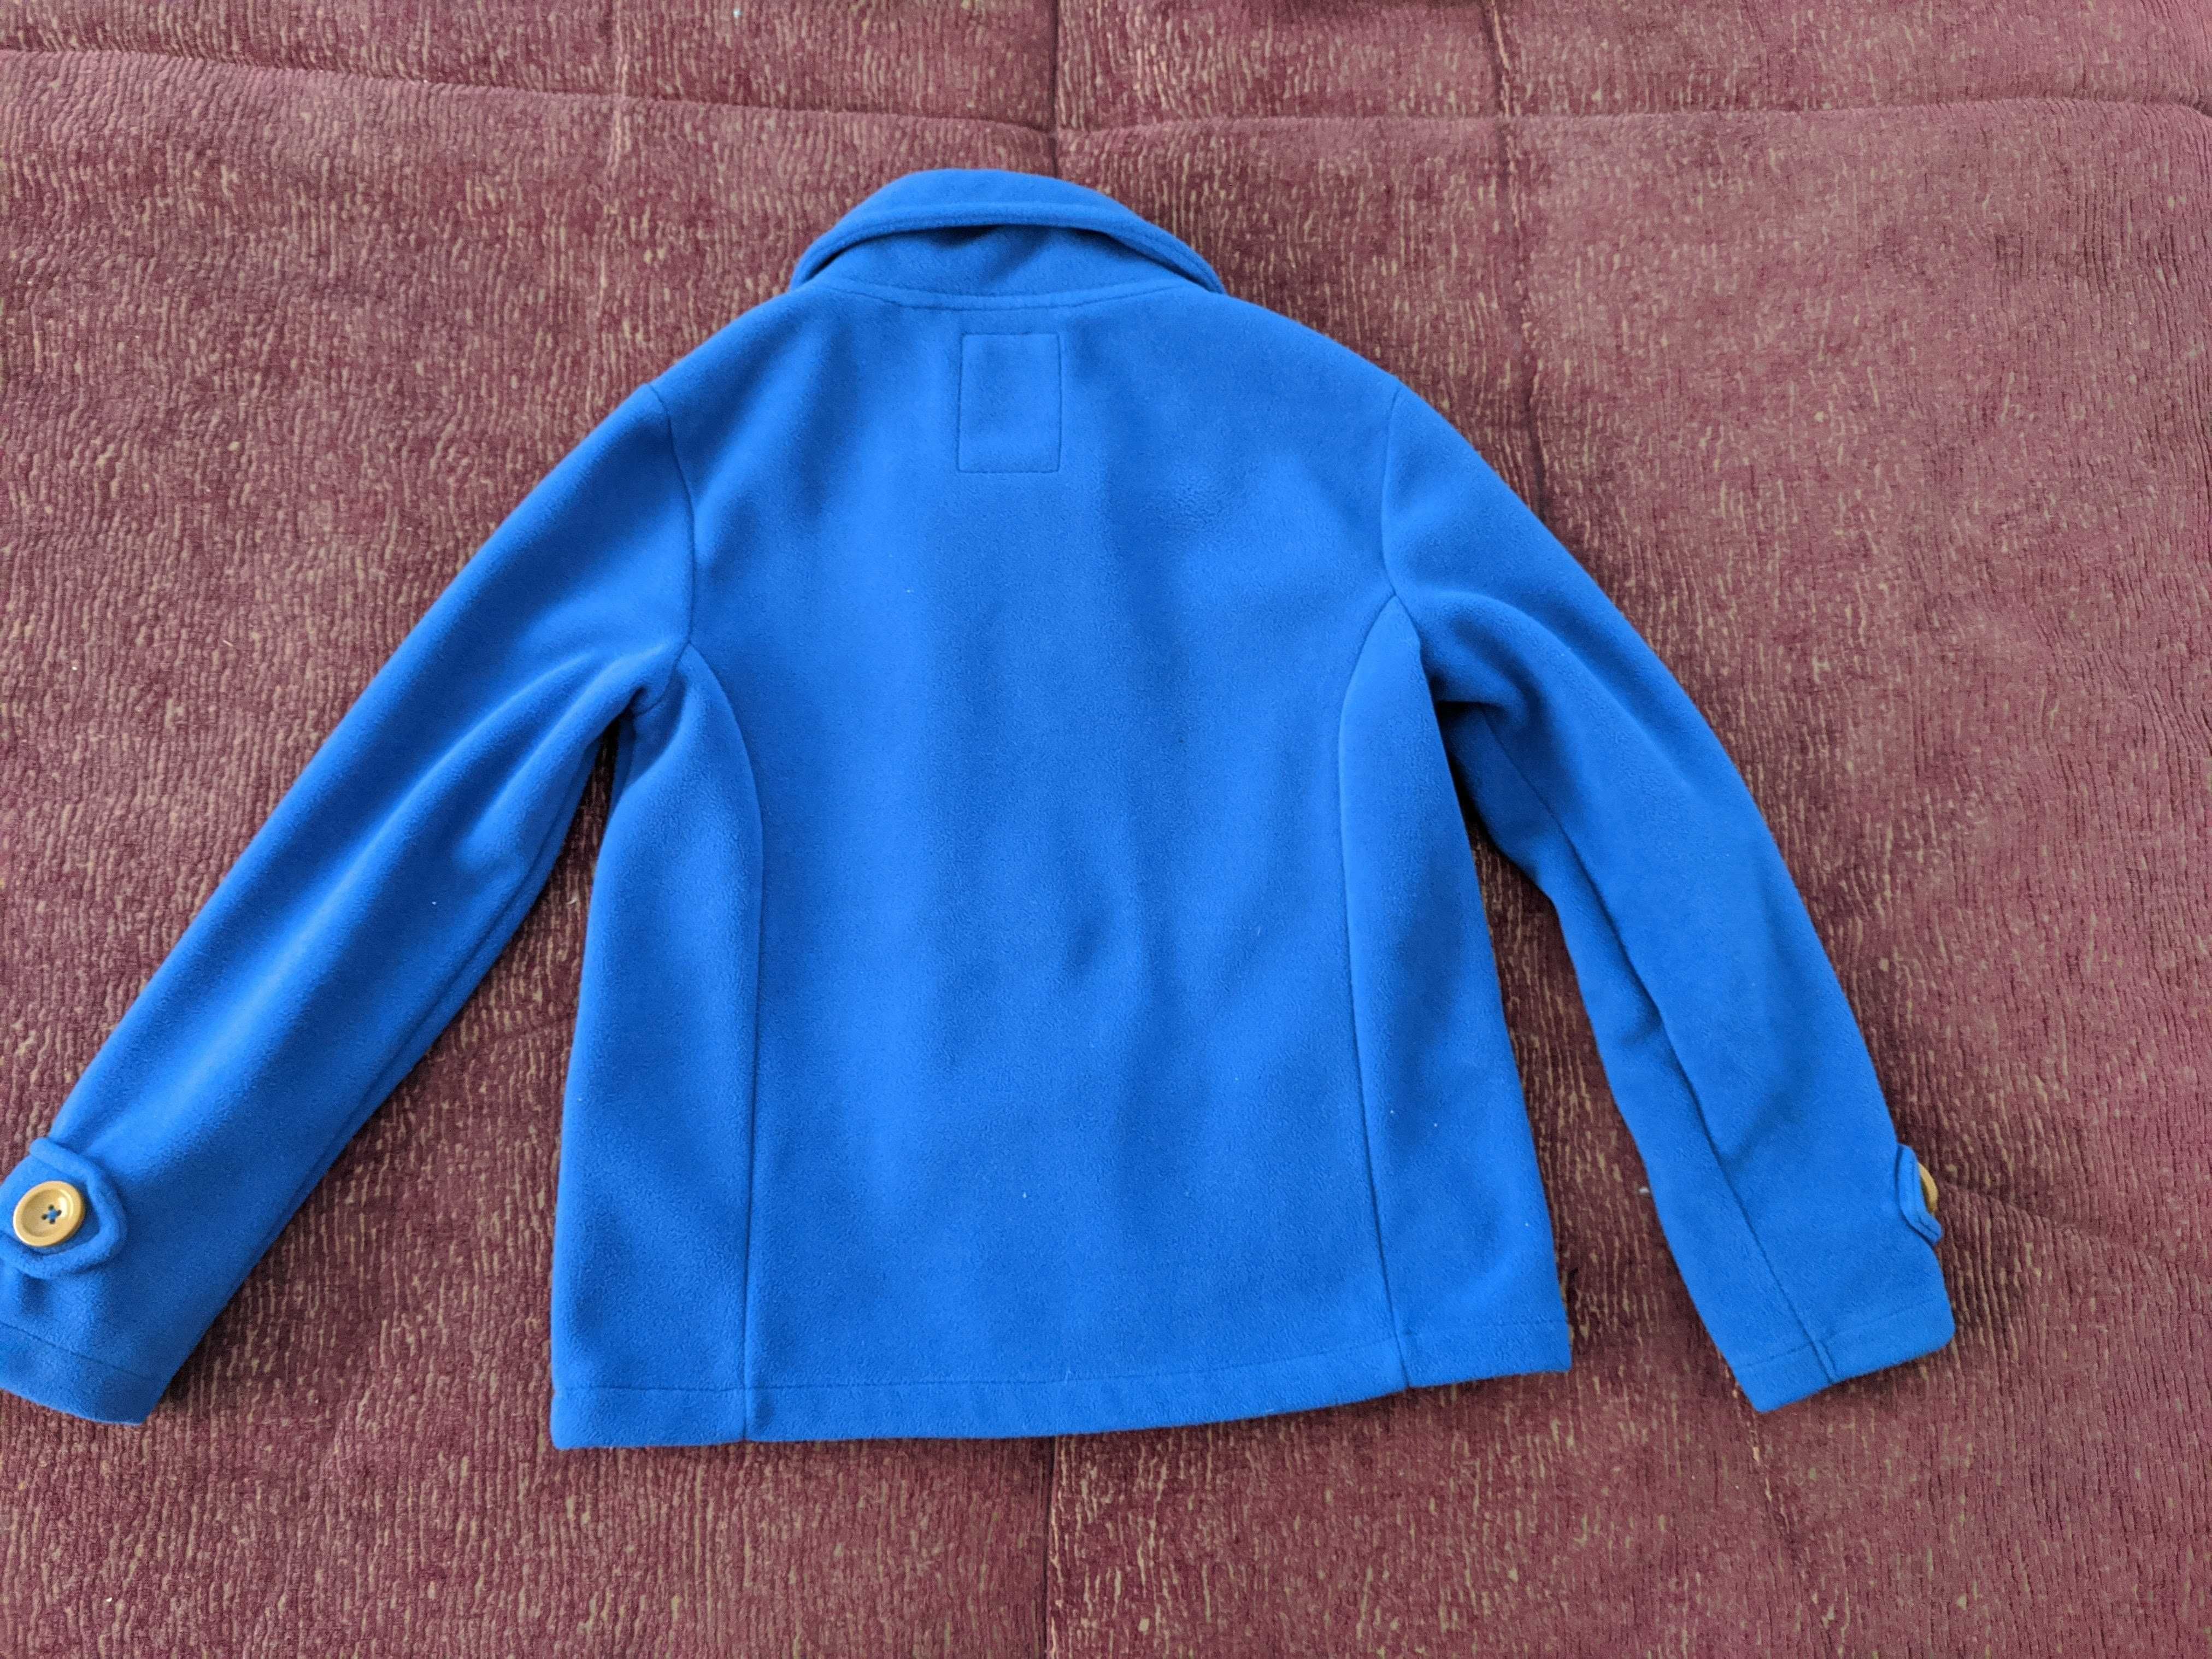 Jacheta albastru royal stofa Next mar 9-10 ani, 140 cm